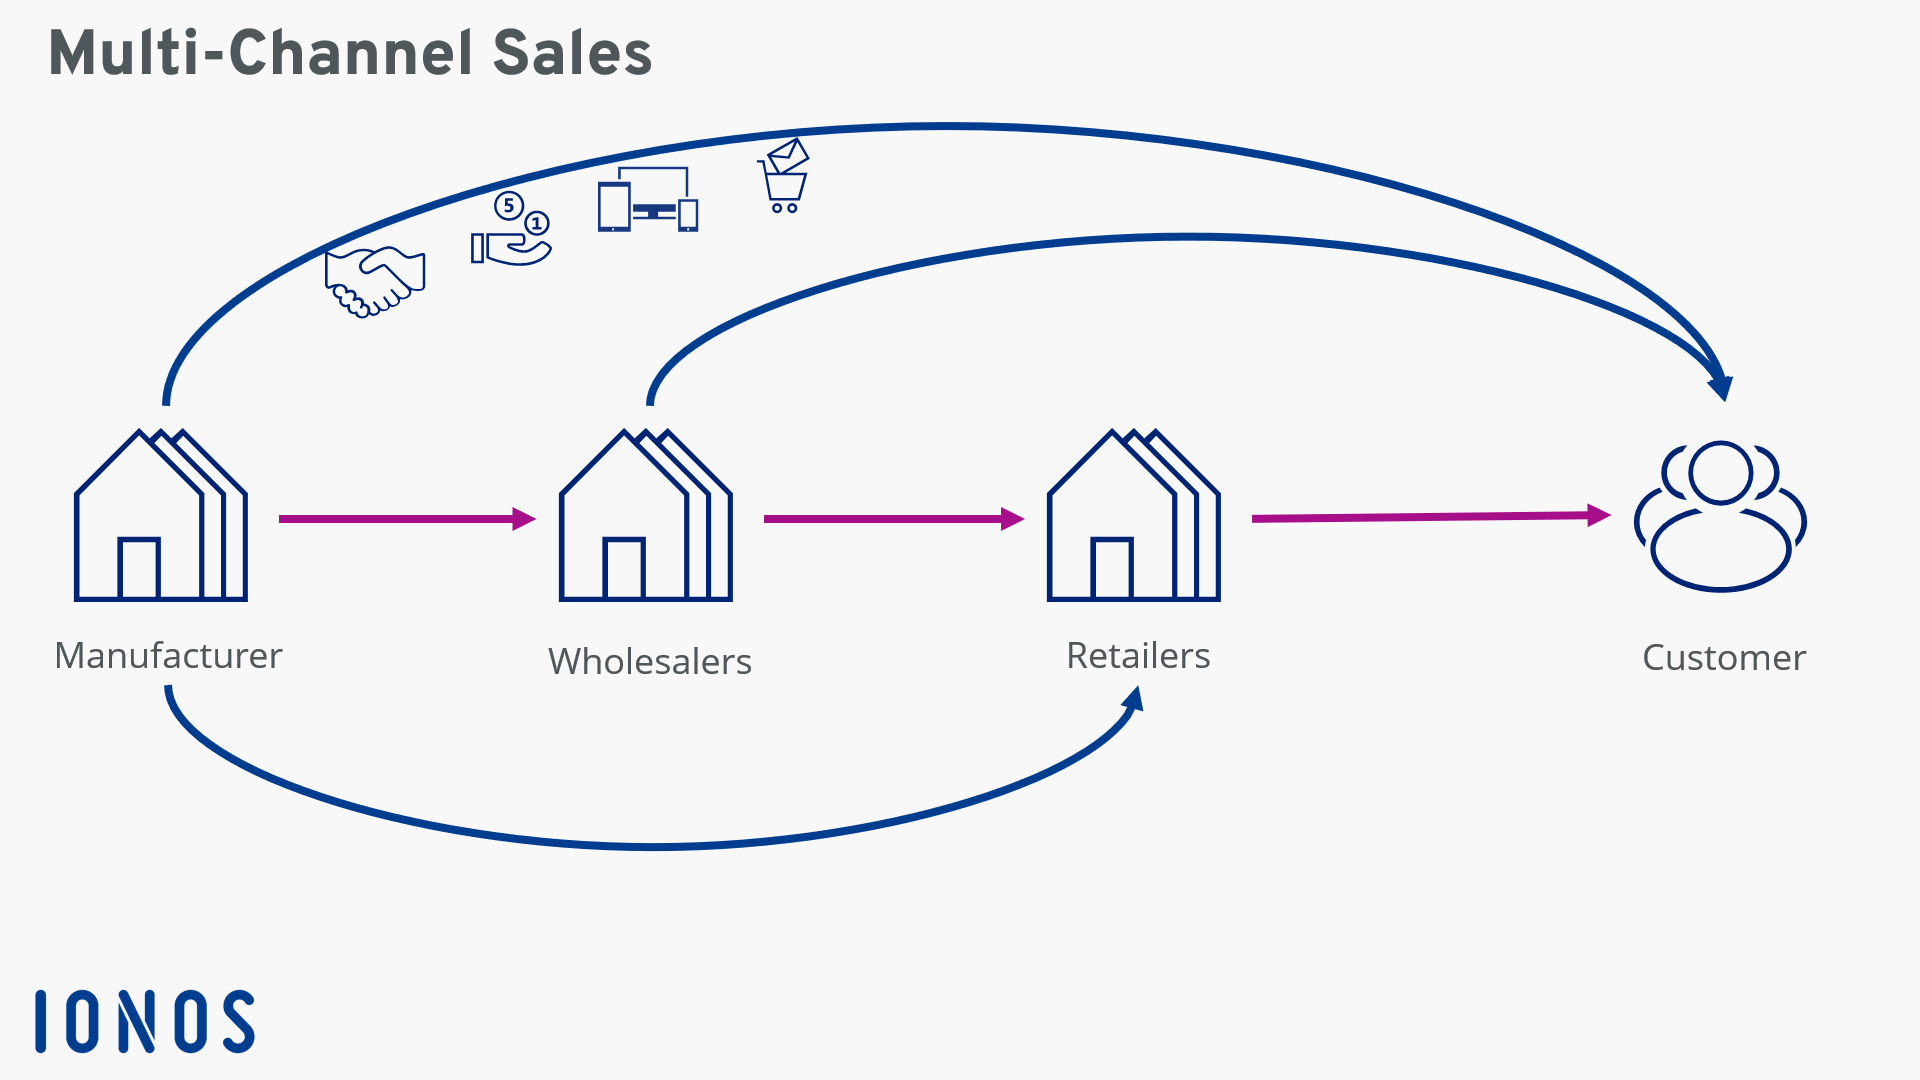 Multi-channel sales